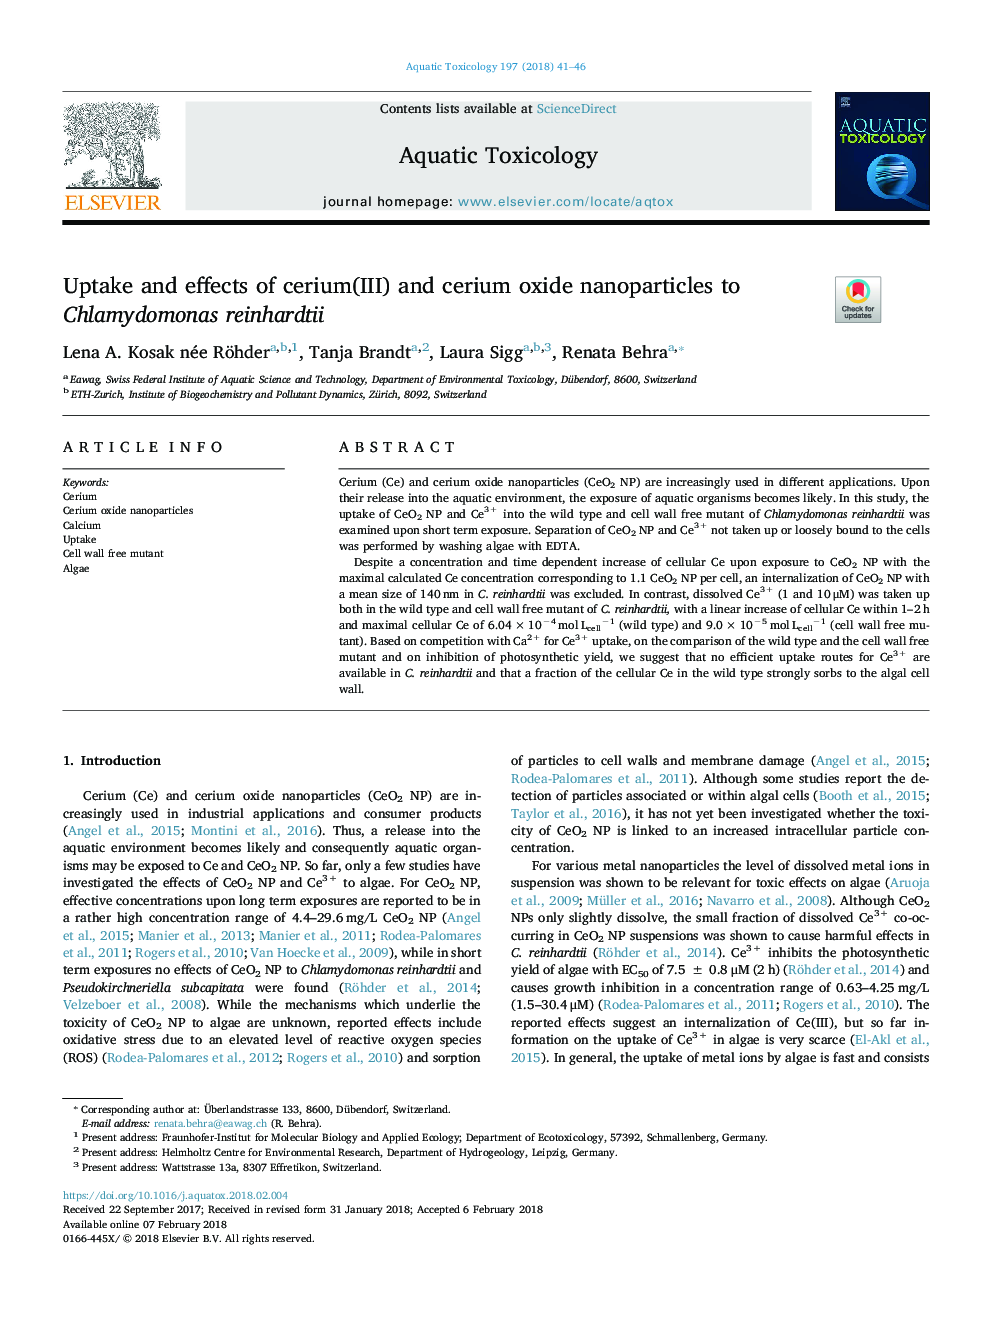 Uptake and effects of cerium(III) and cerium oxide nanoparticles to Chlamydomonas reinhardtii